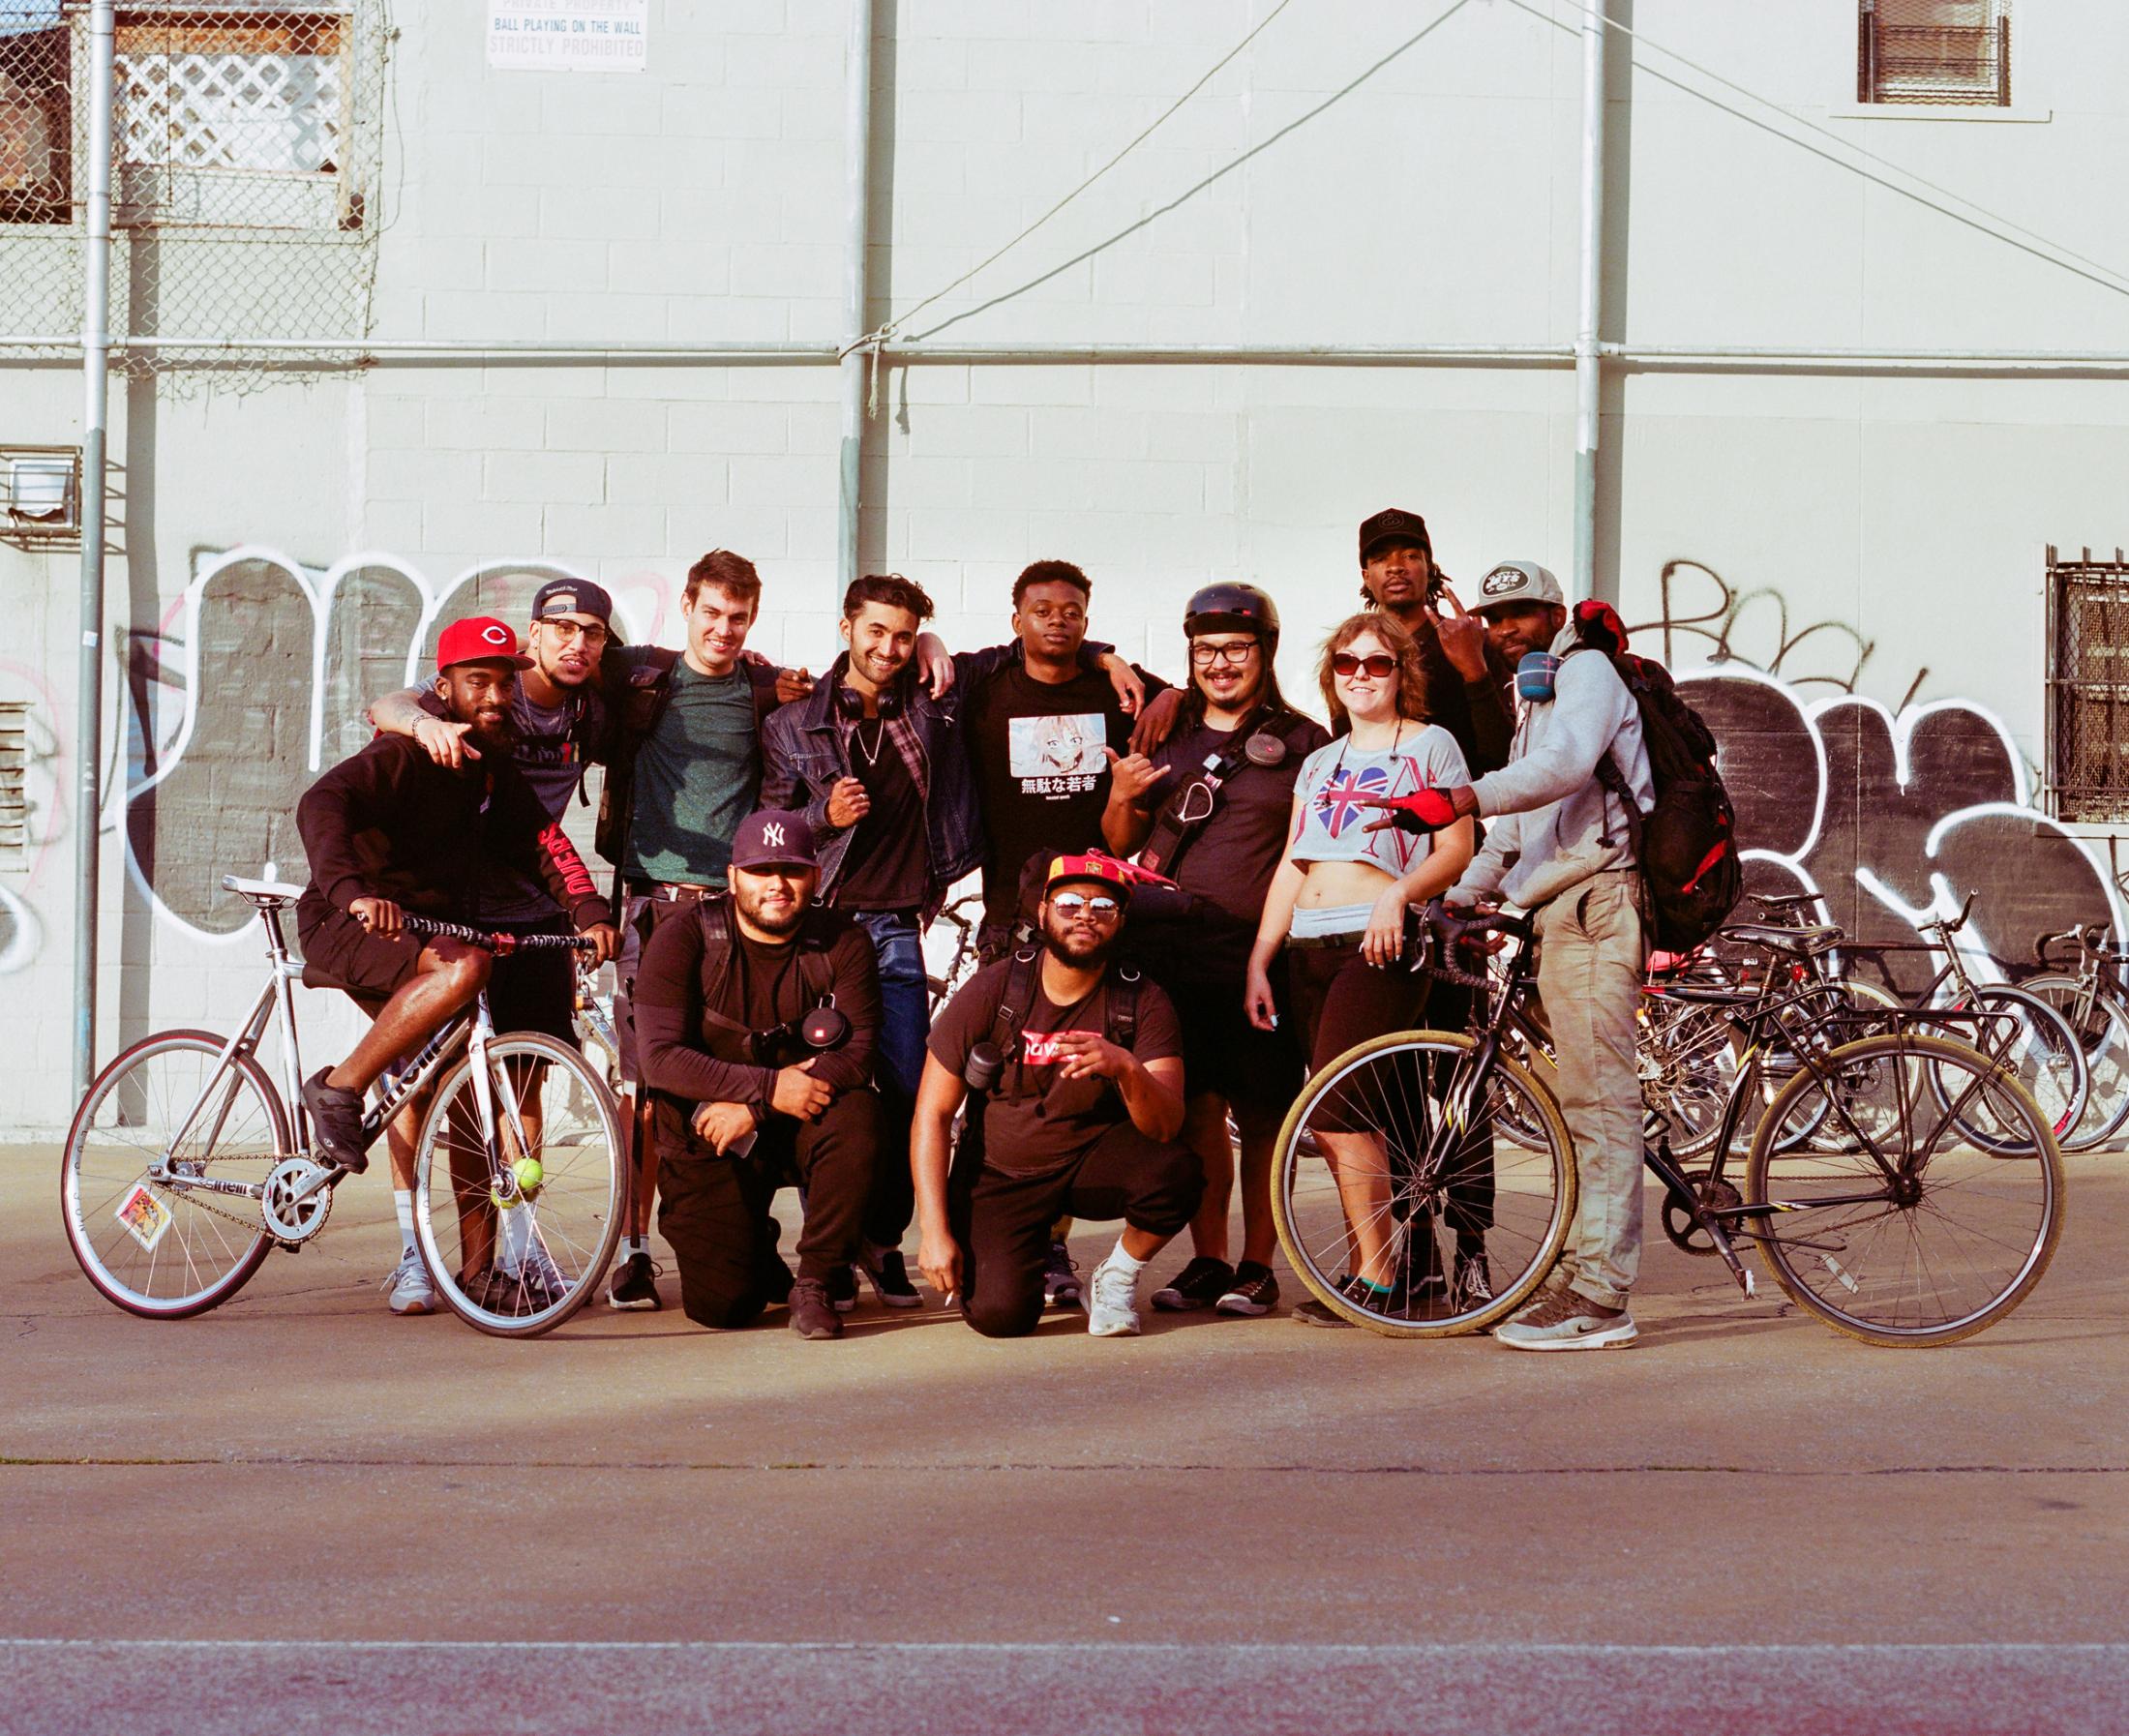 The Bleeker Boys on September 27, 2019 in NYC. Photo essay on Bike Messengers.